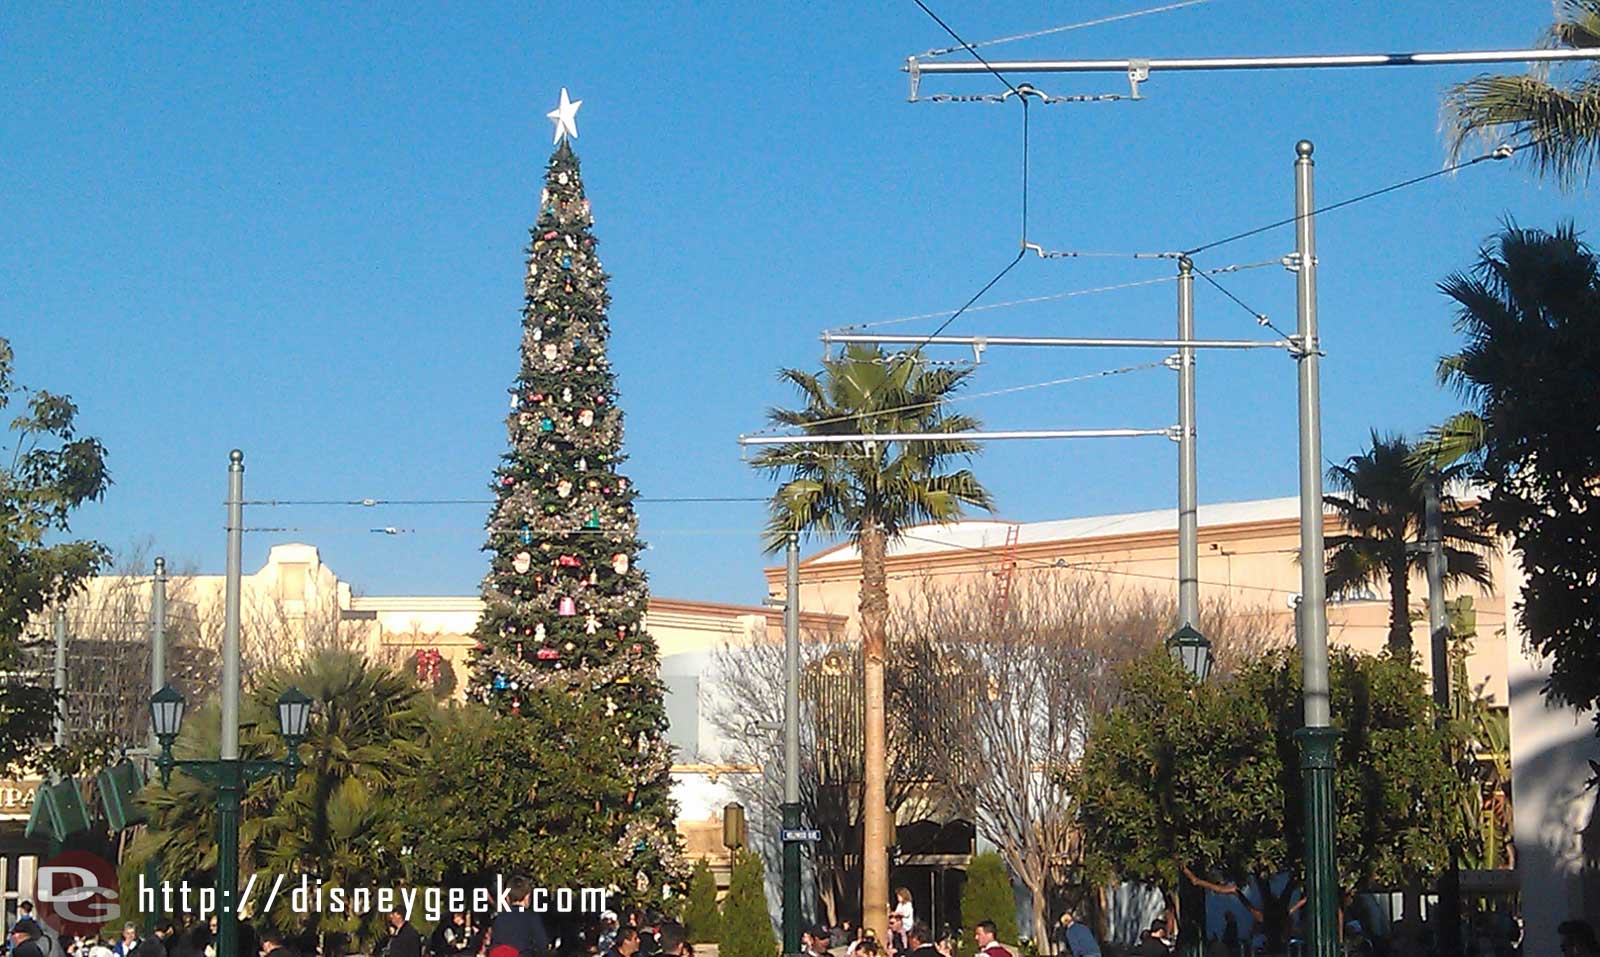 The Christmas tree on BuenaVistaStreet